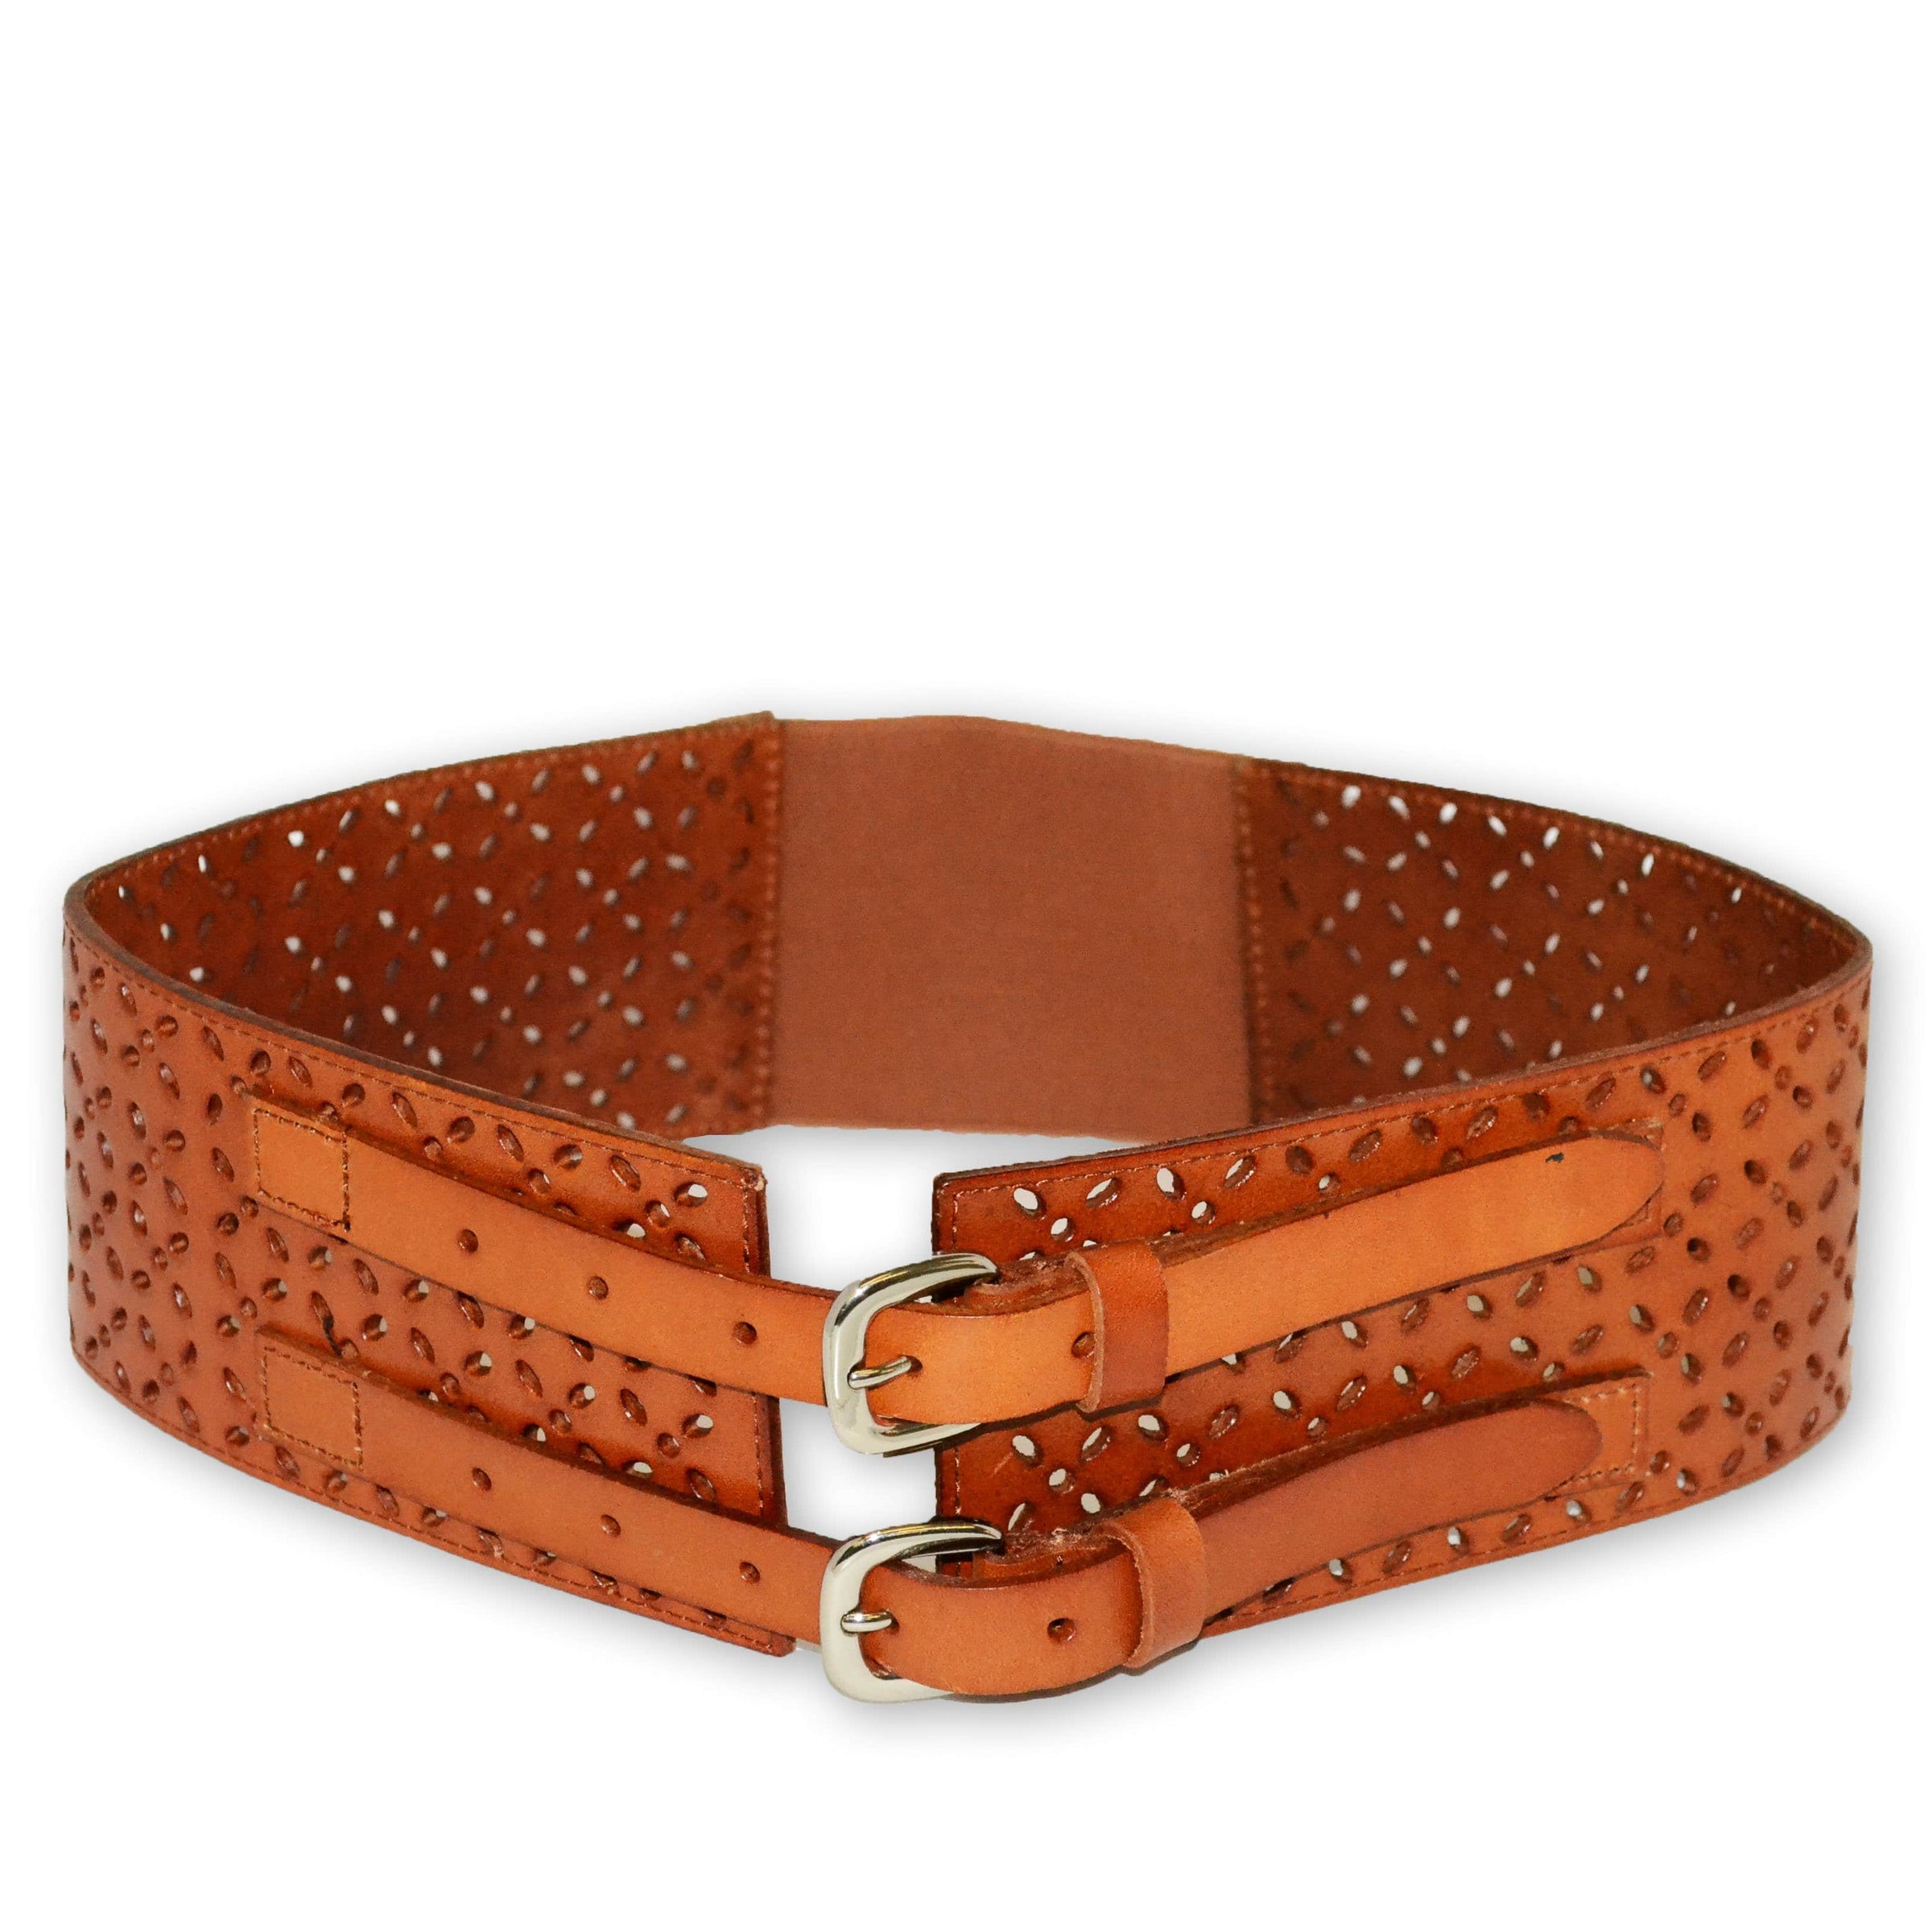 PICTON - Addison Road Leather Wide Double Buckle Tan Waist Belt  - Belt N Bags